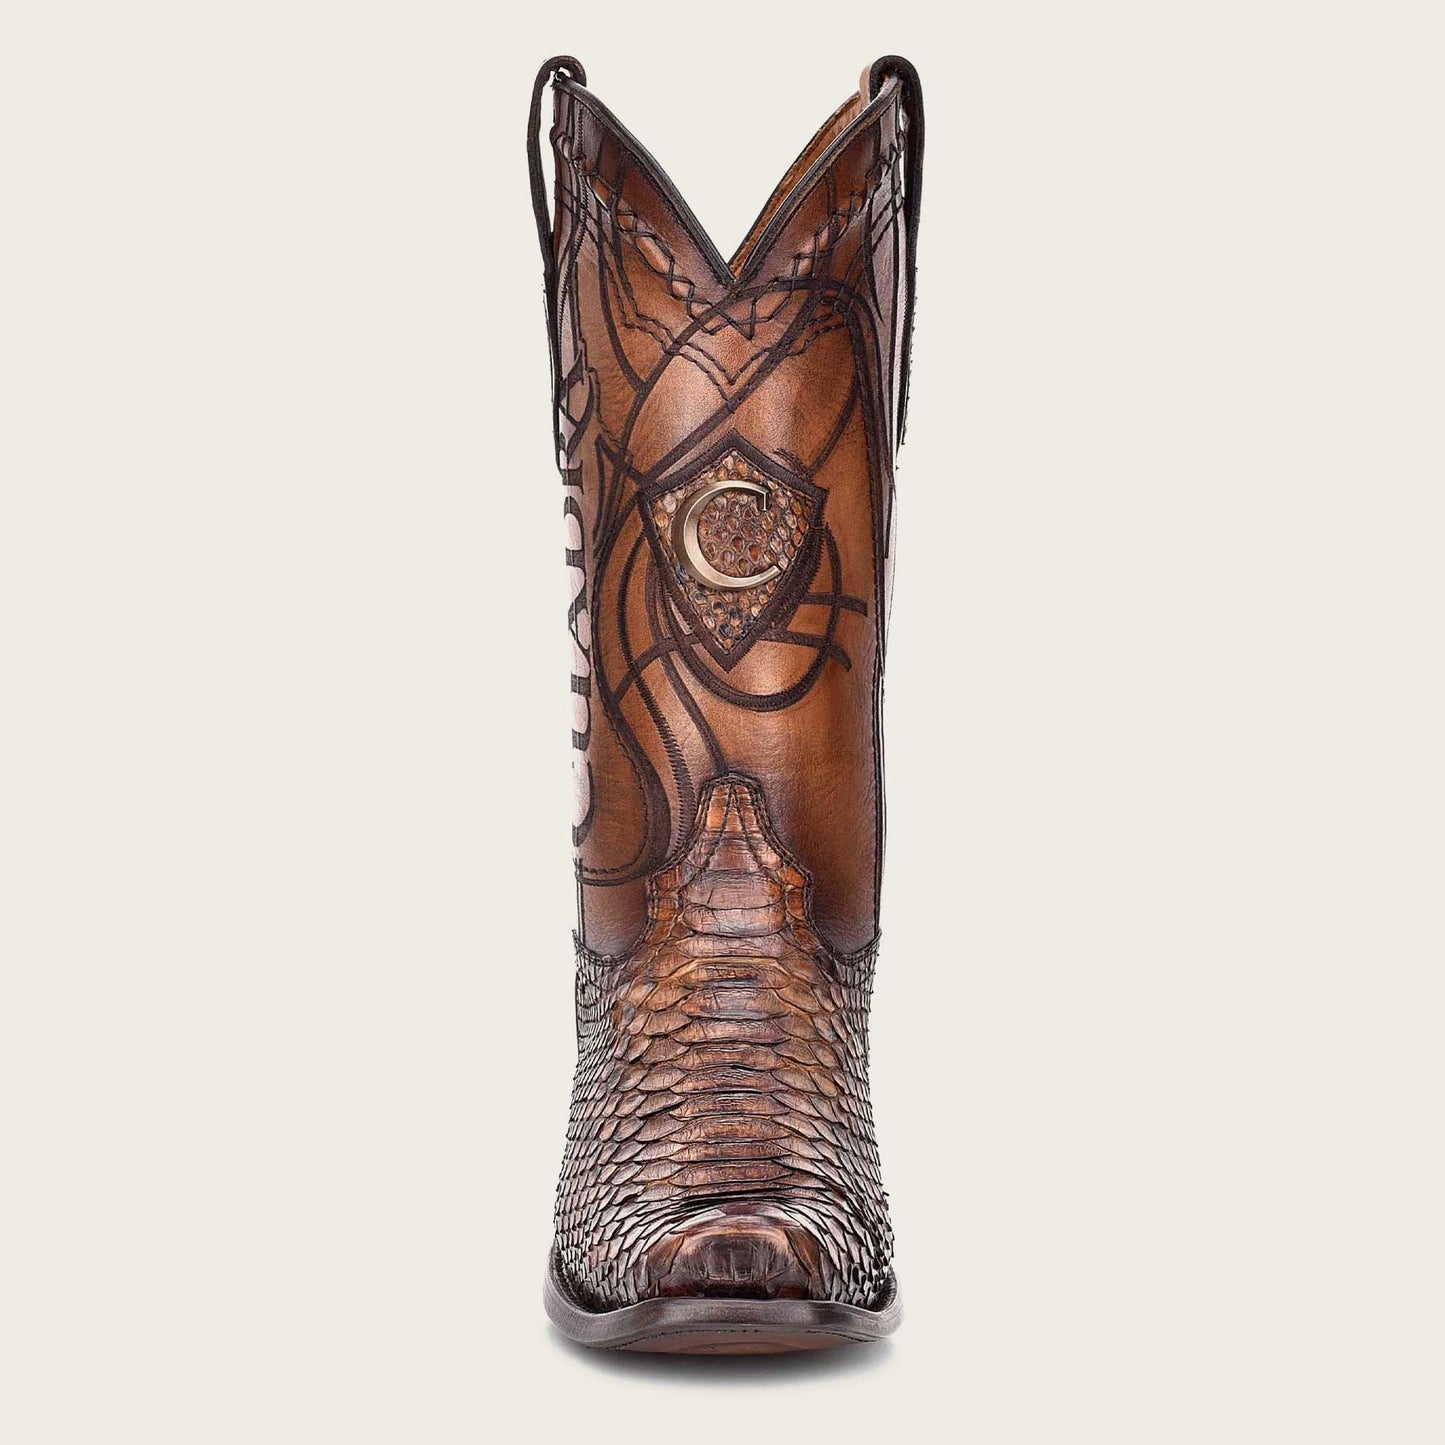 Cuadra engraved honey python leather western boot